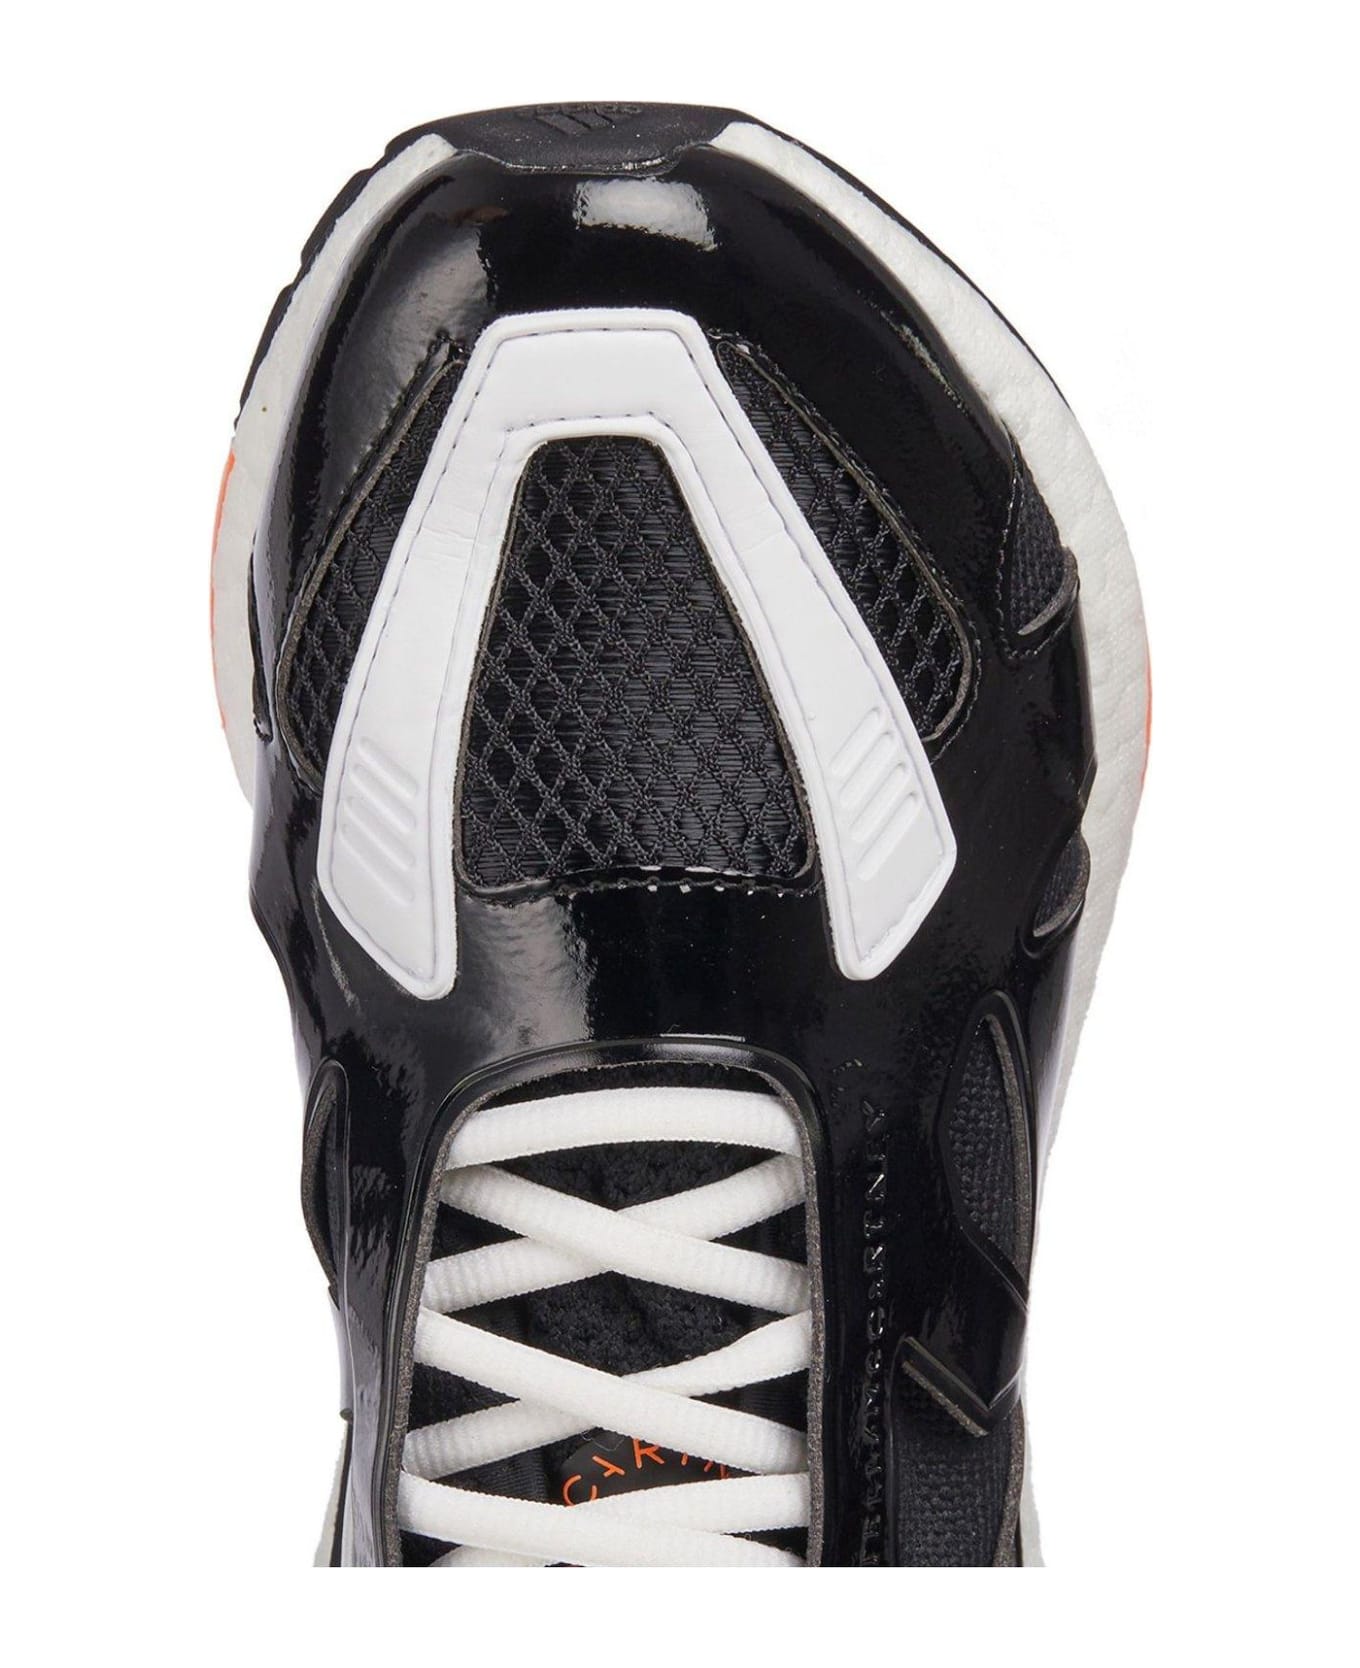 Adidas by Stella McCartney Ultraboost 22 Sneakers - Black